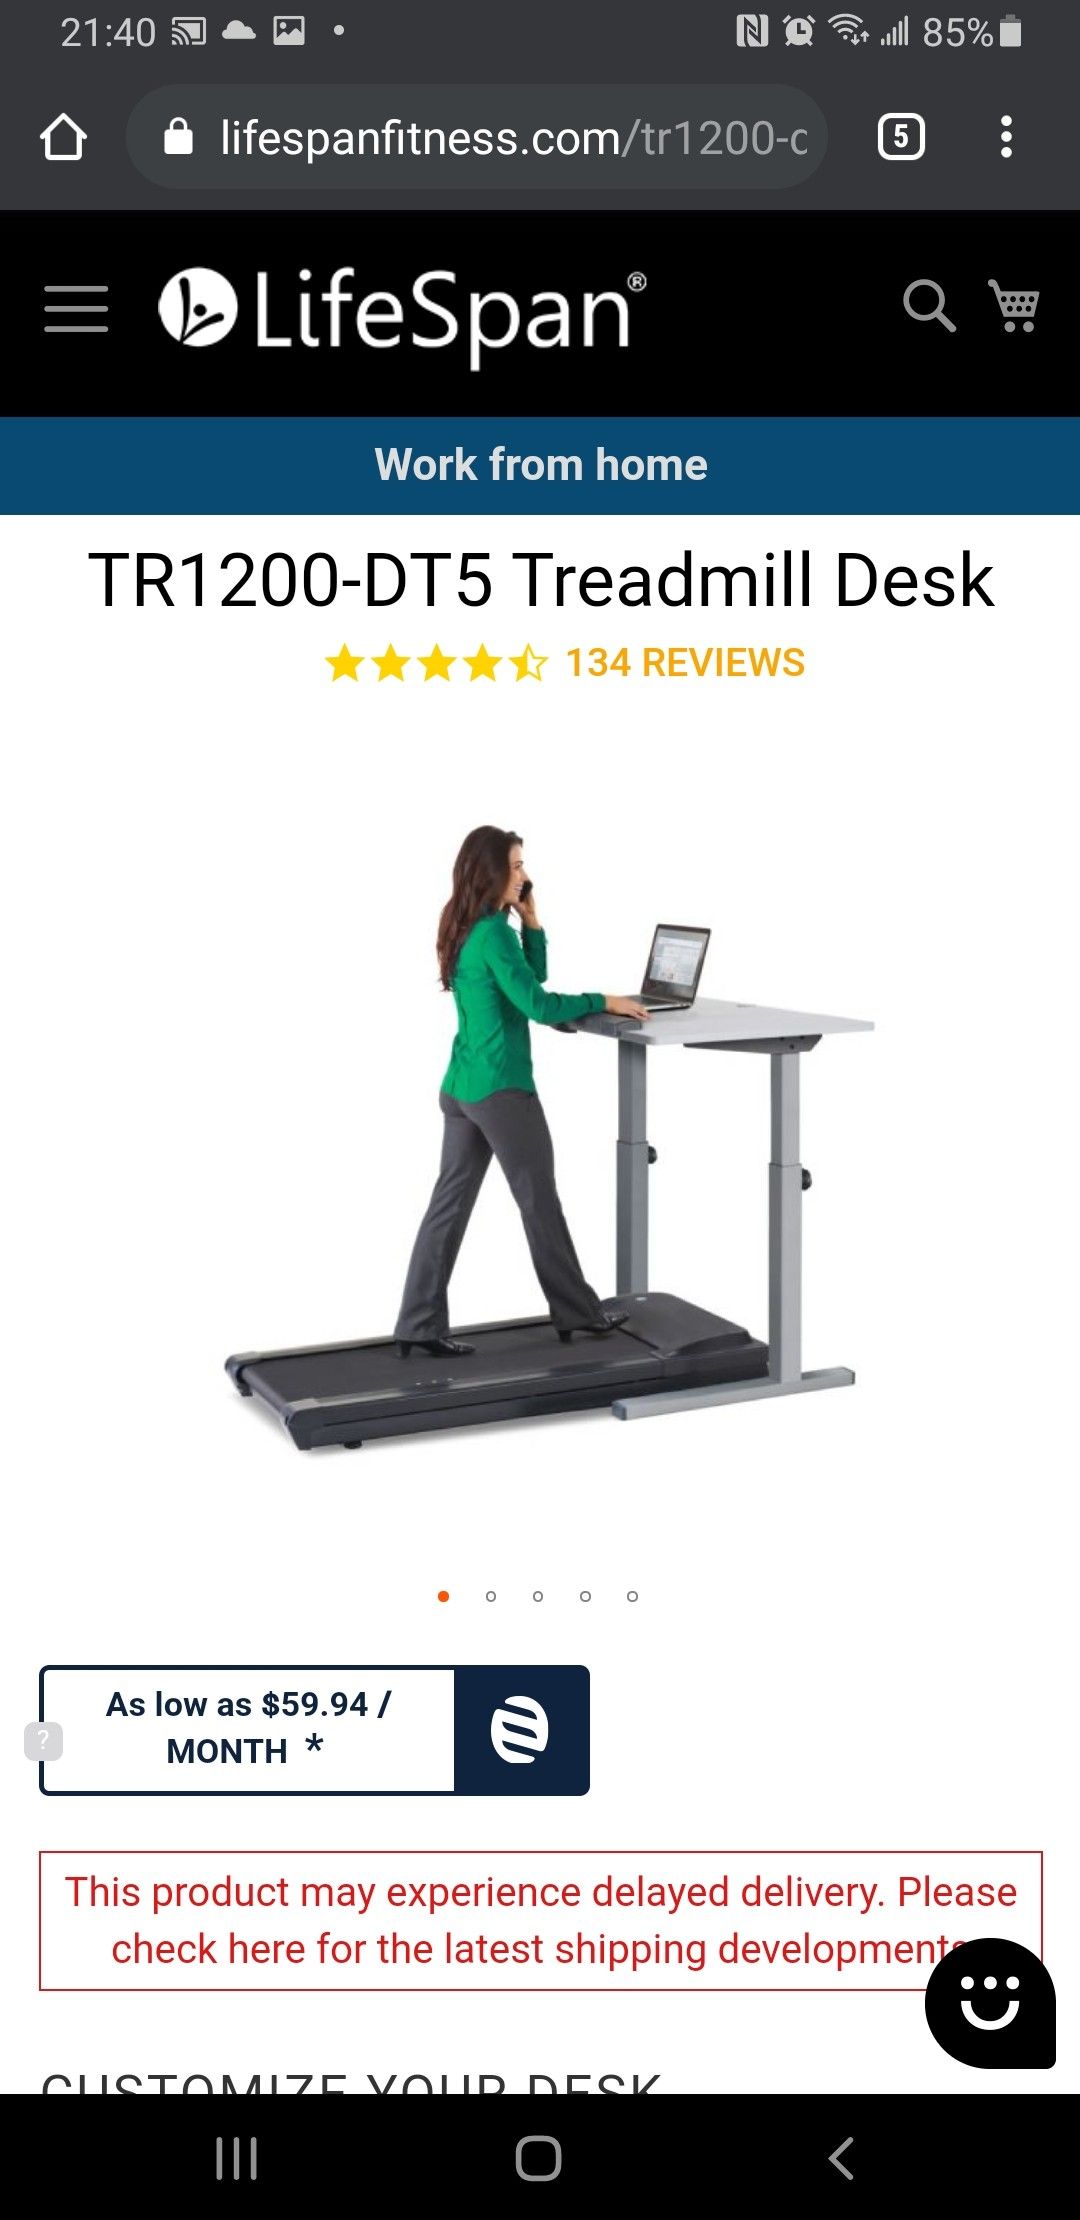 Life Span walking desk/treadmill